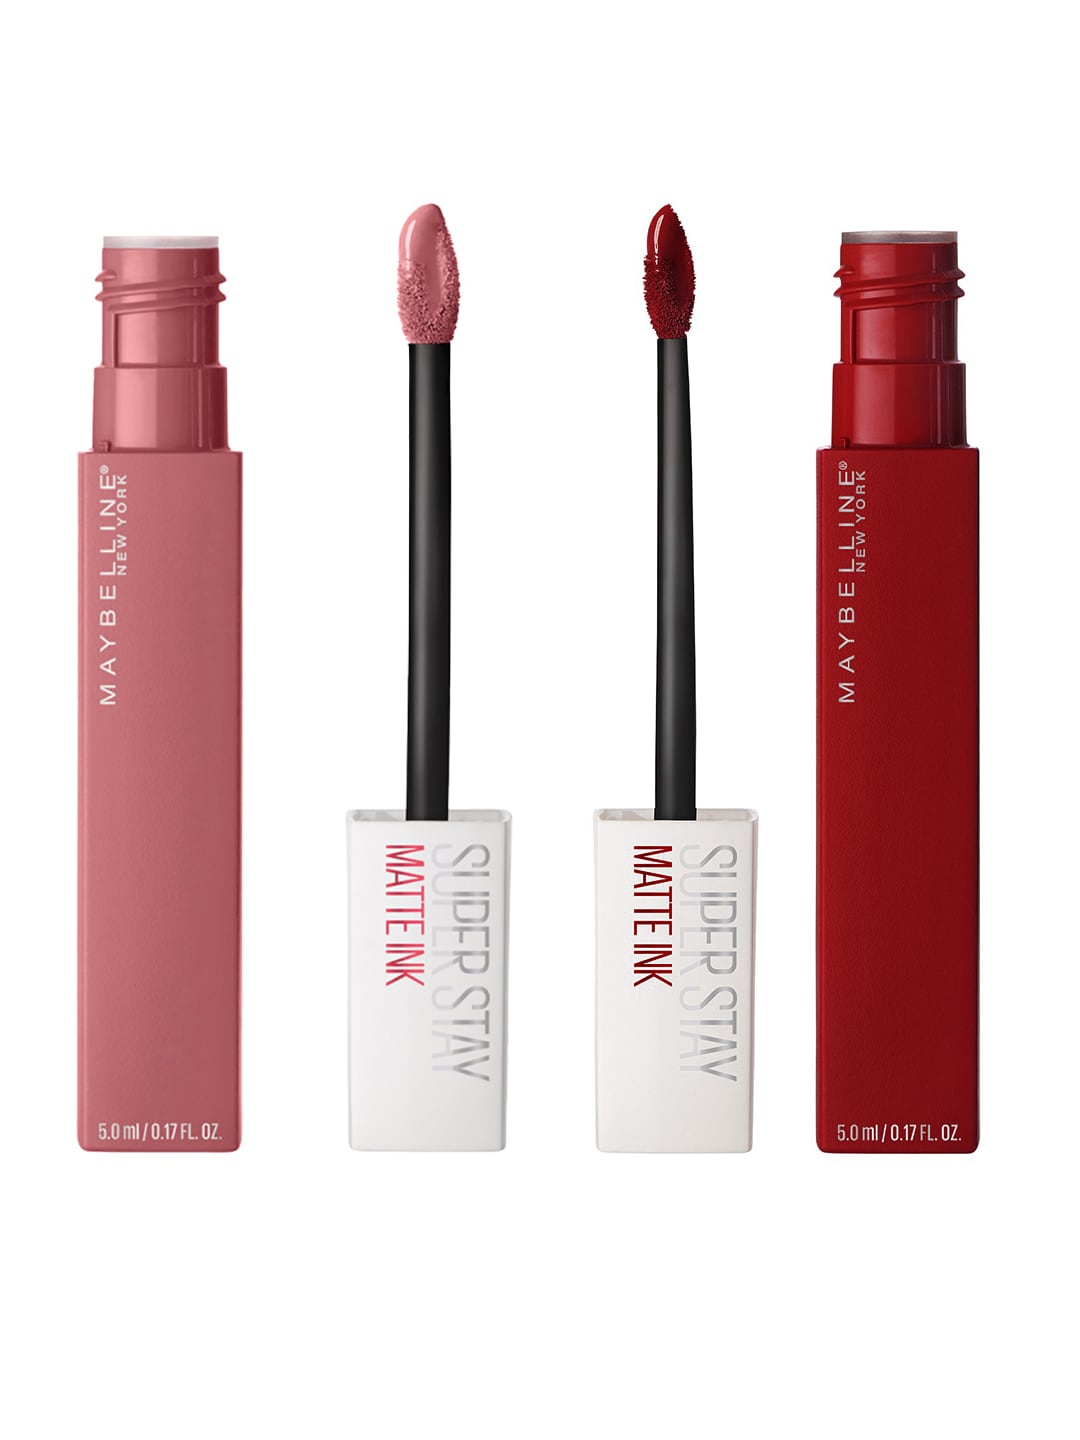 Maybelline New York Set of 2 Super Stay Matte Ink Lipsticks- Pioneer 20 & Self-Starter 130 Price in India